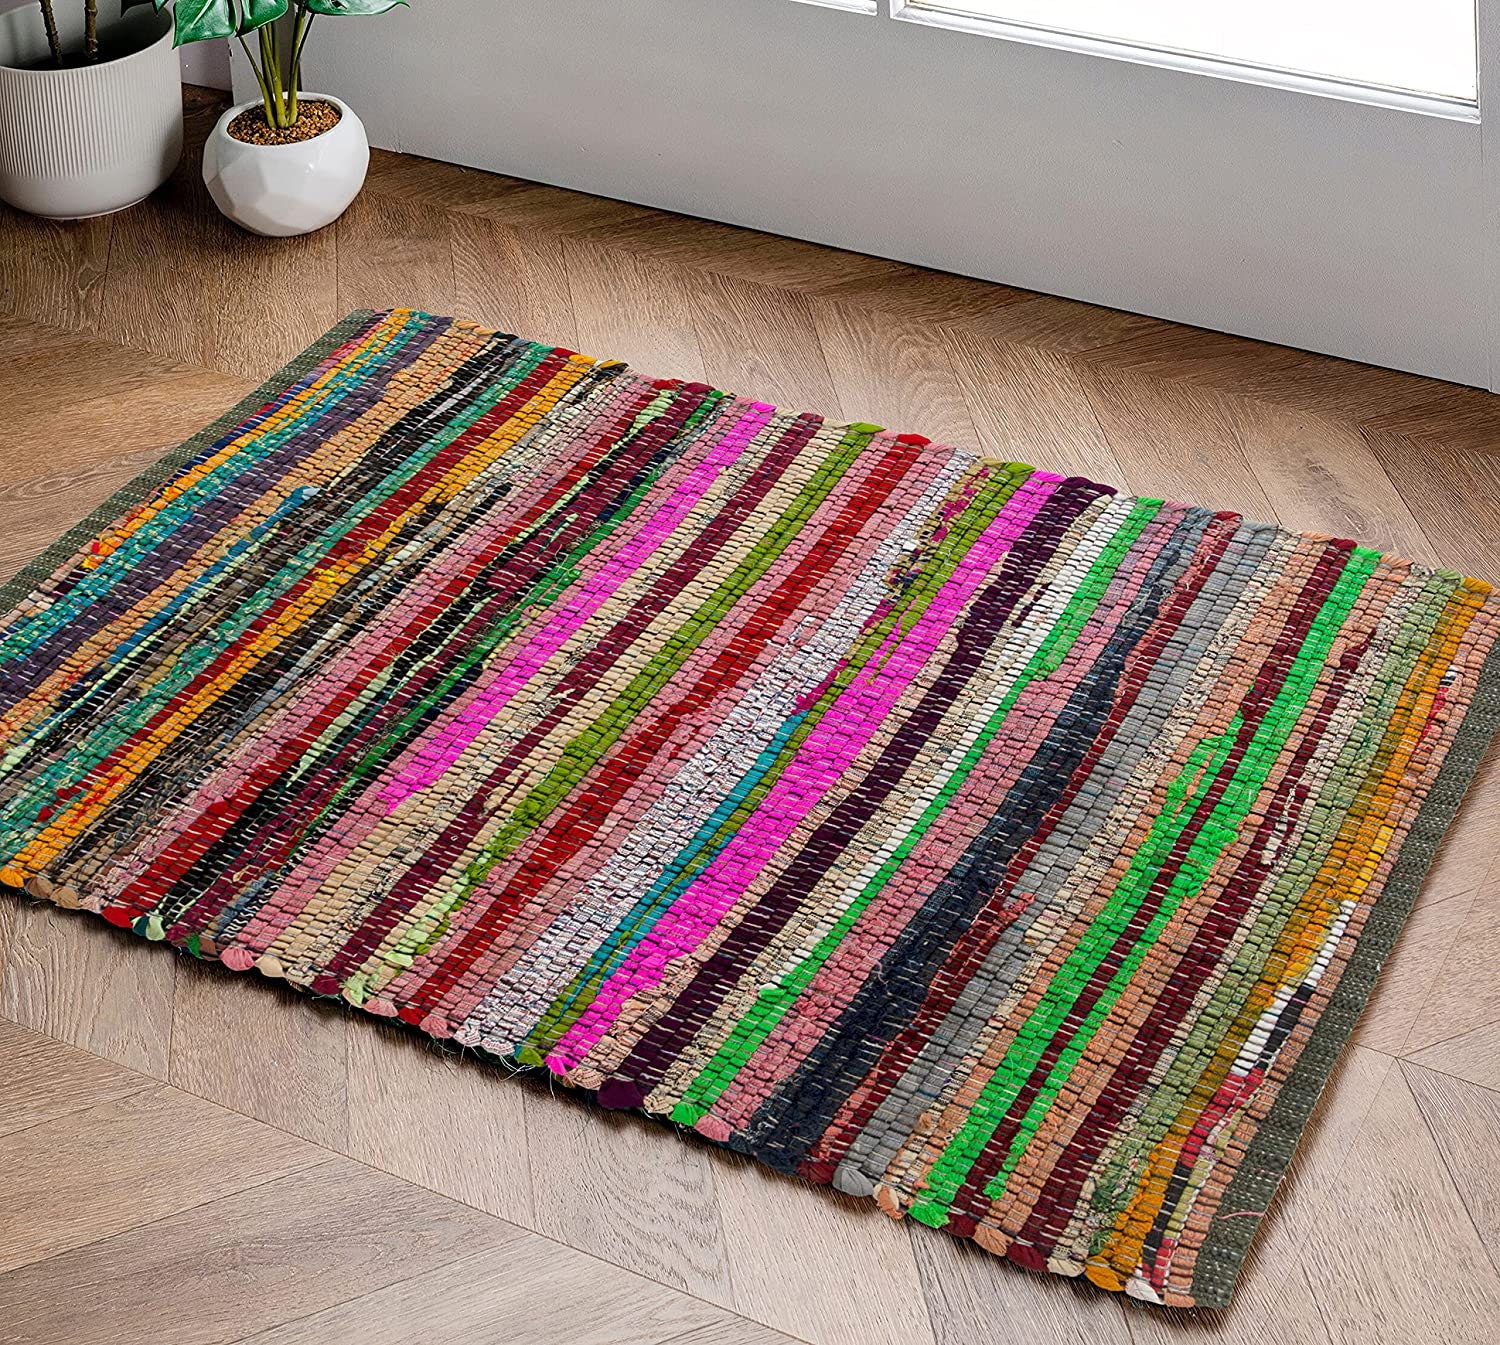 Rectangular Multicolor Recycle Hosiery Room Rug, Size: 2x3 Feet